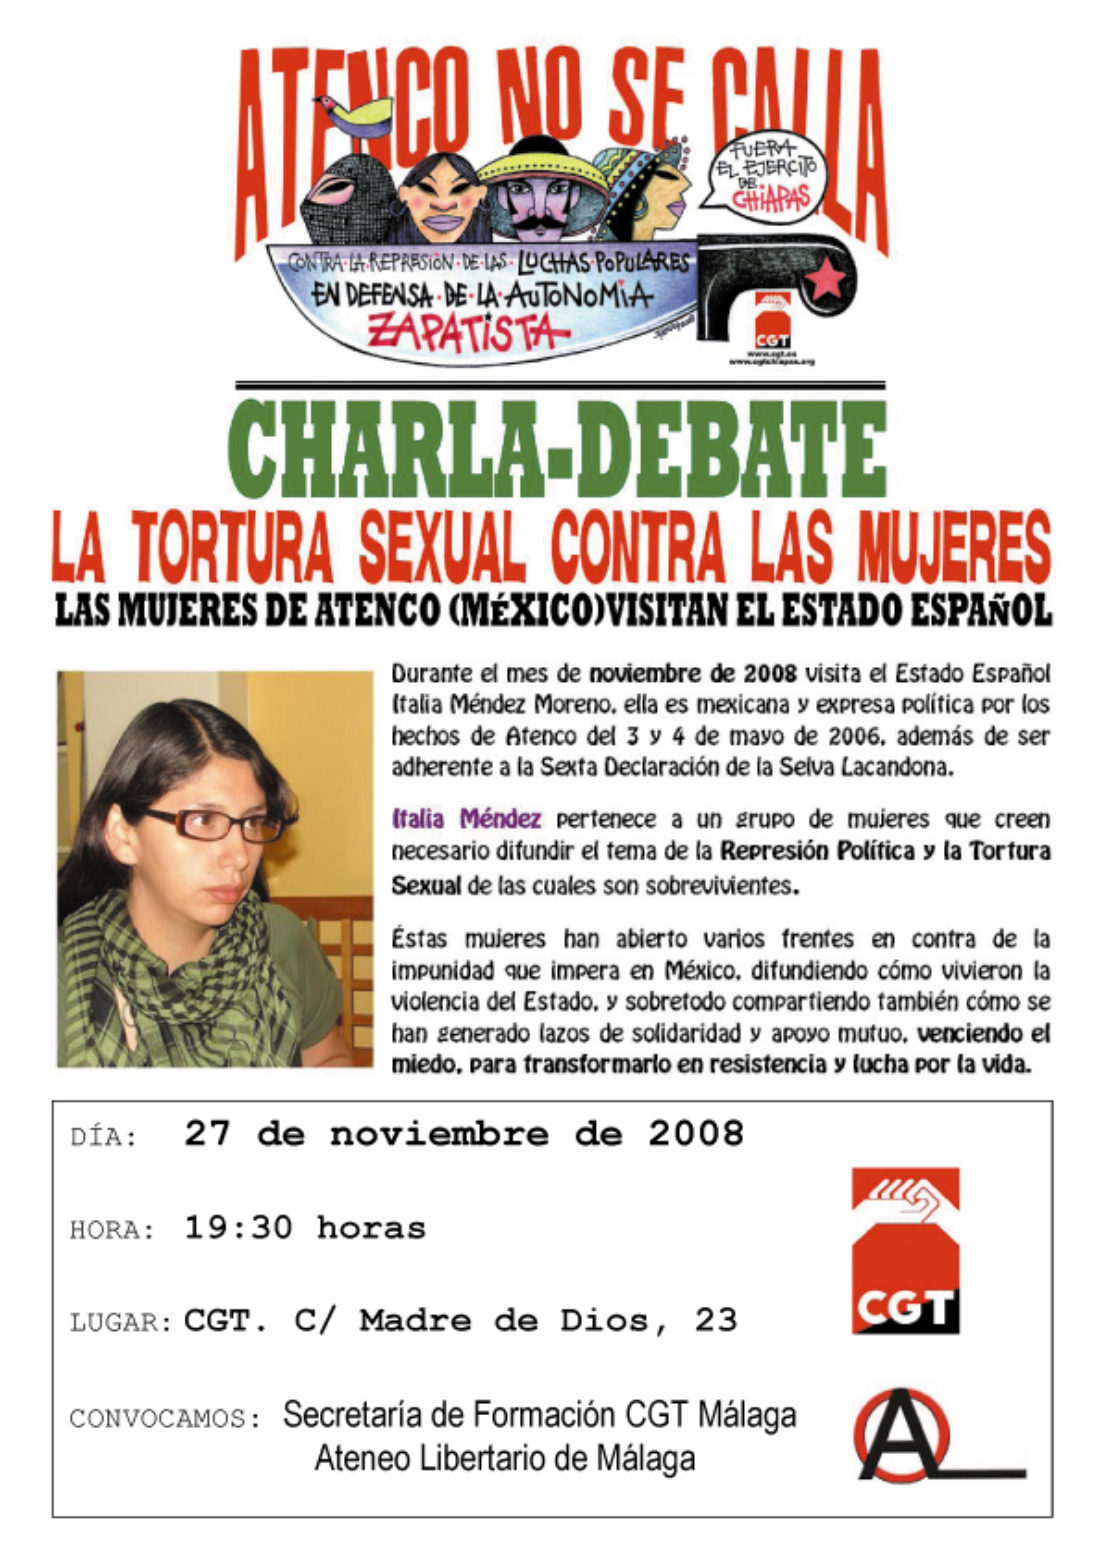 Jueves 27, en CGT Málaga. Charla de Italia Méndez, ex-presa política de Atenco, México